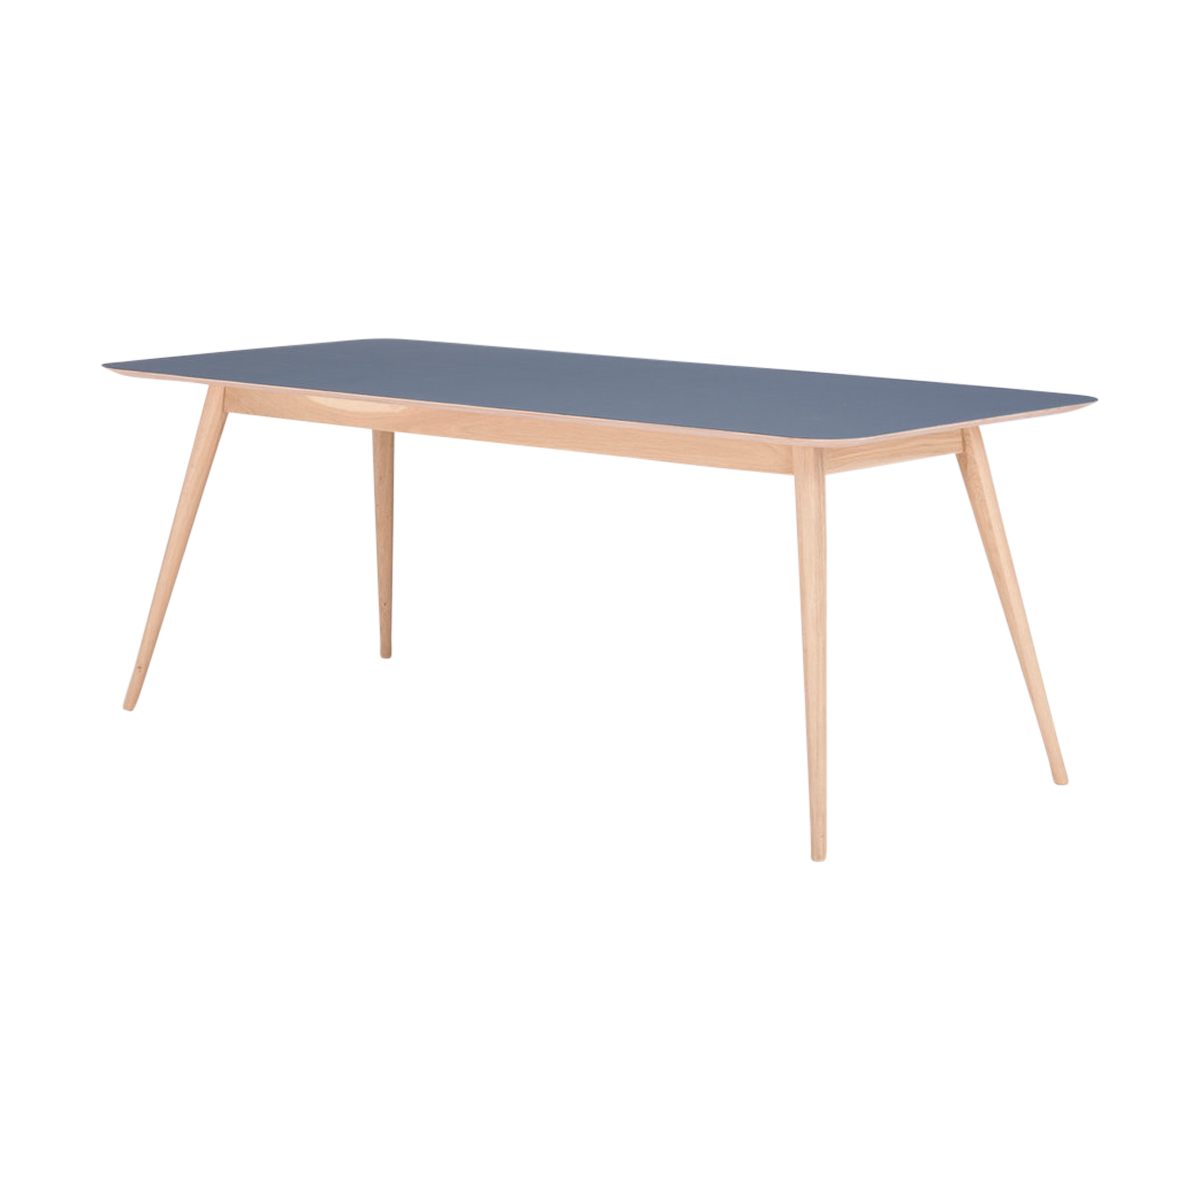 Stafa table houten eettafel whitewash - met linoleum tafelblad smokey blue - 180 x 90 cm